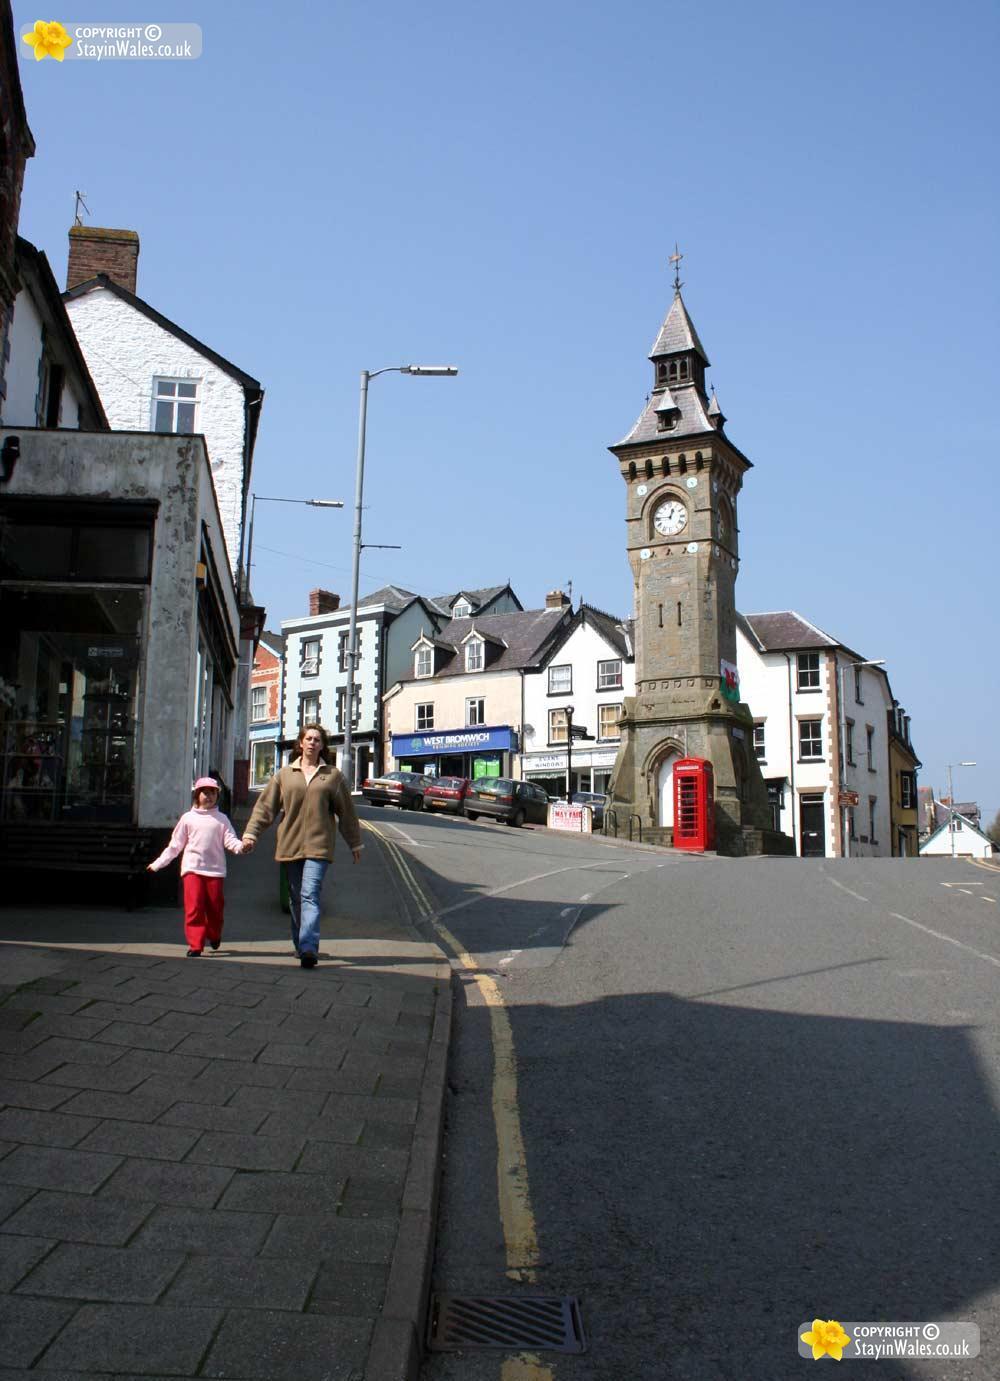 Clock tower in Knighton, Powys